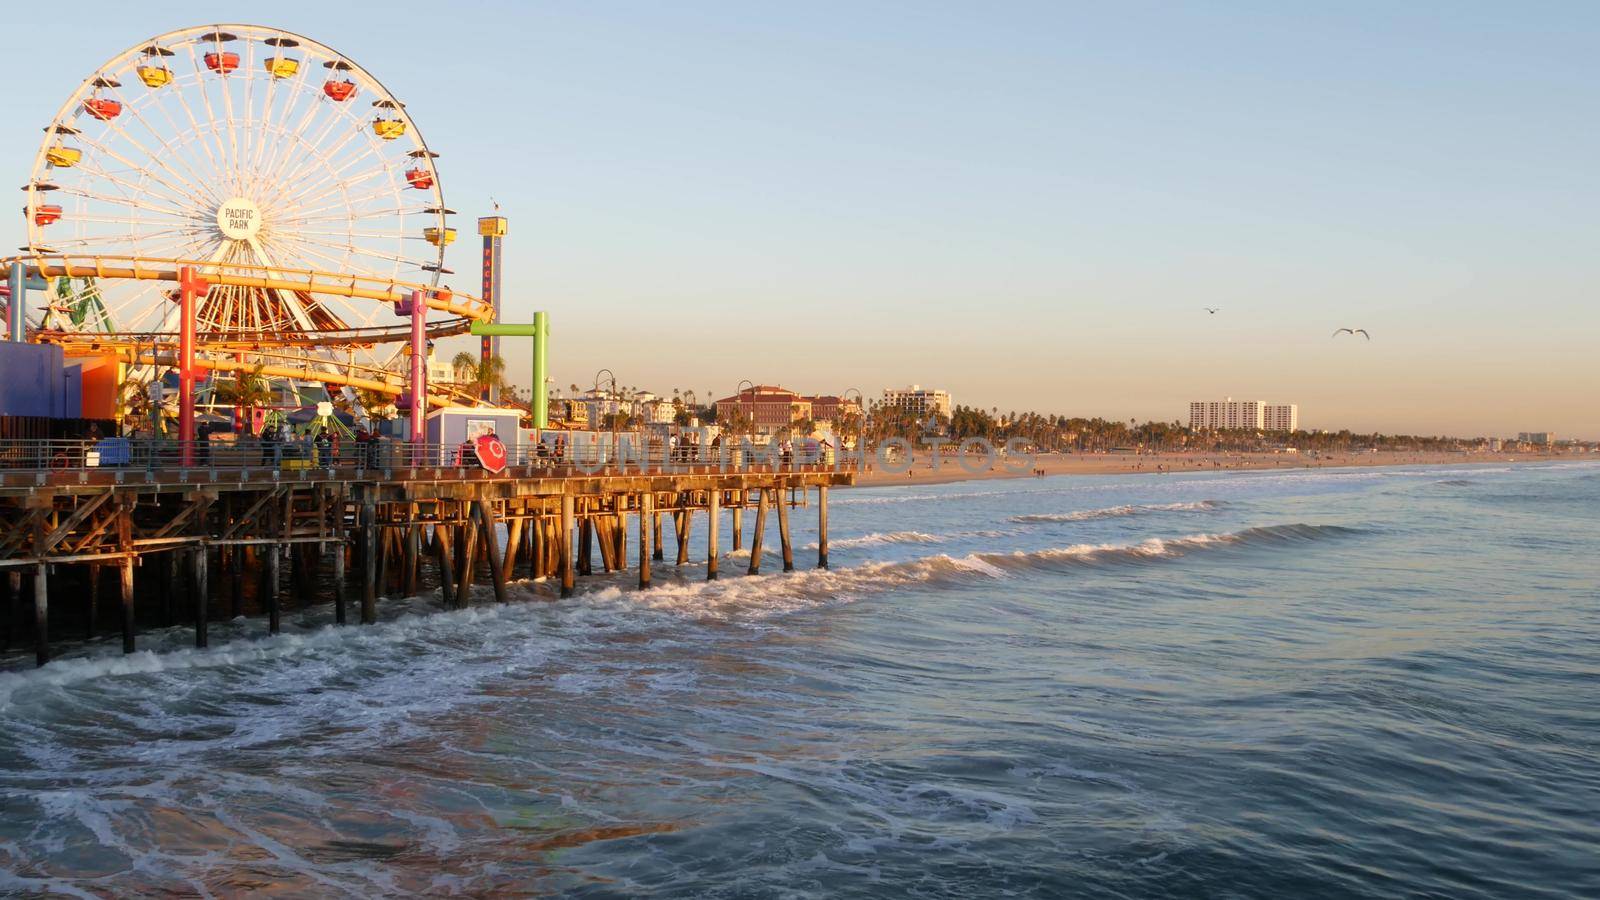 SANTA MONICA, LOS ANGELES CA USA - 19 DEC 2019: Classic ferris wheel in amusement park on pier. California summertime beach aesthetic, ocean waves in pink sunset. Summertime iconic symbol.